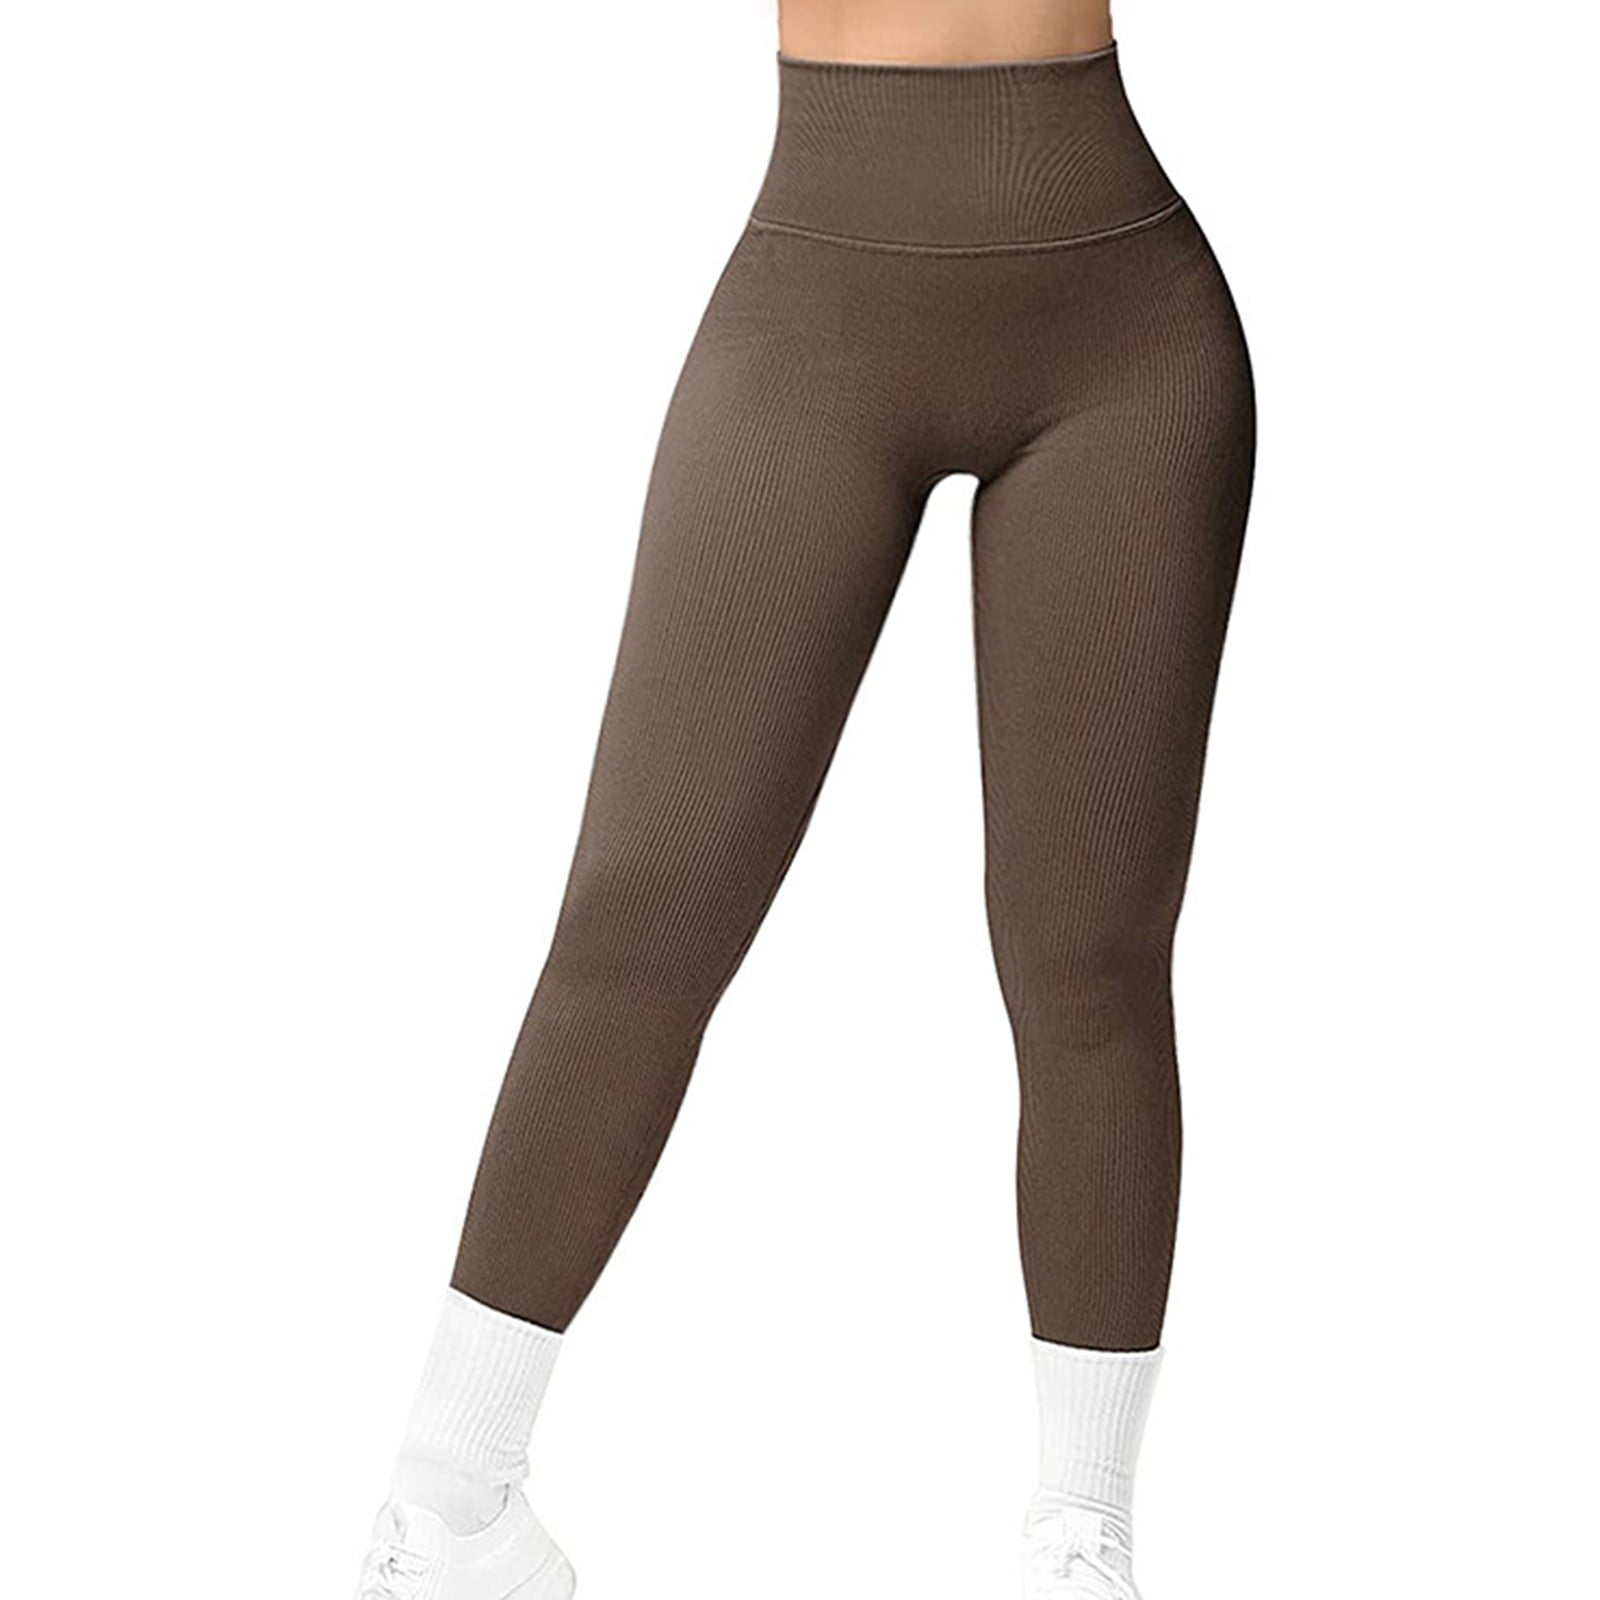 adviicd Yoga Pants For Girls Womens Yoga Pants Women's Yoga Pants with  Pockets - Leggings with Pockets, High Waist Tummy Control Non See-Through Workout  Pants Grey L 